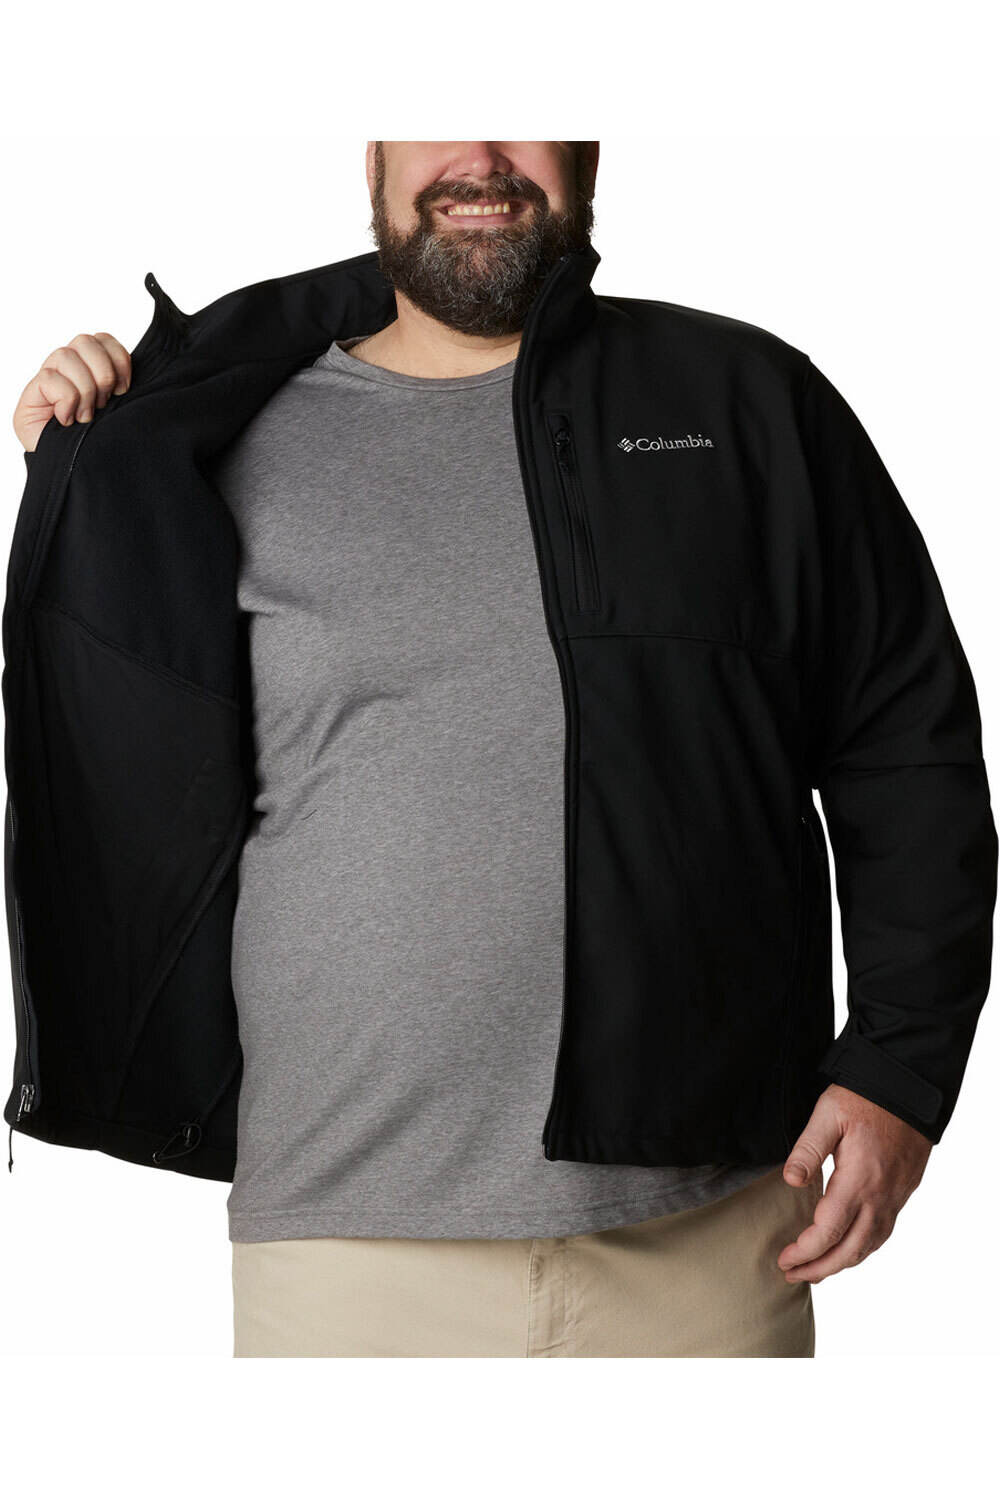 Columbia chaqueta softshell hombre Ascender Softshell Jacket vista detalle